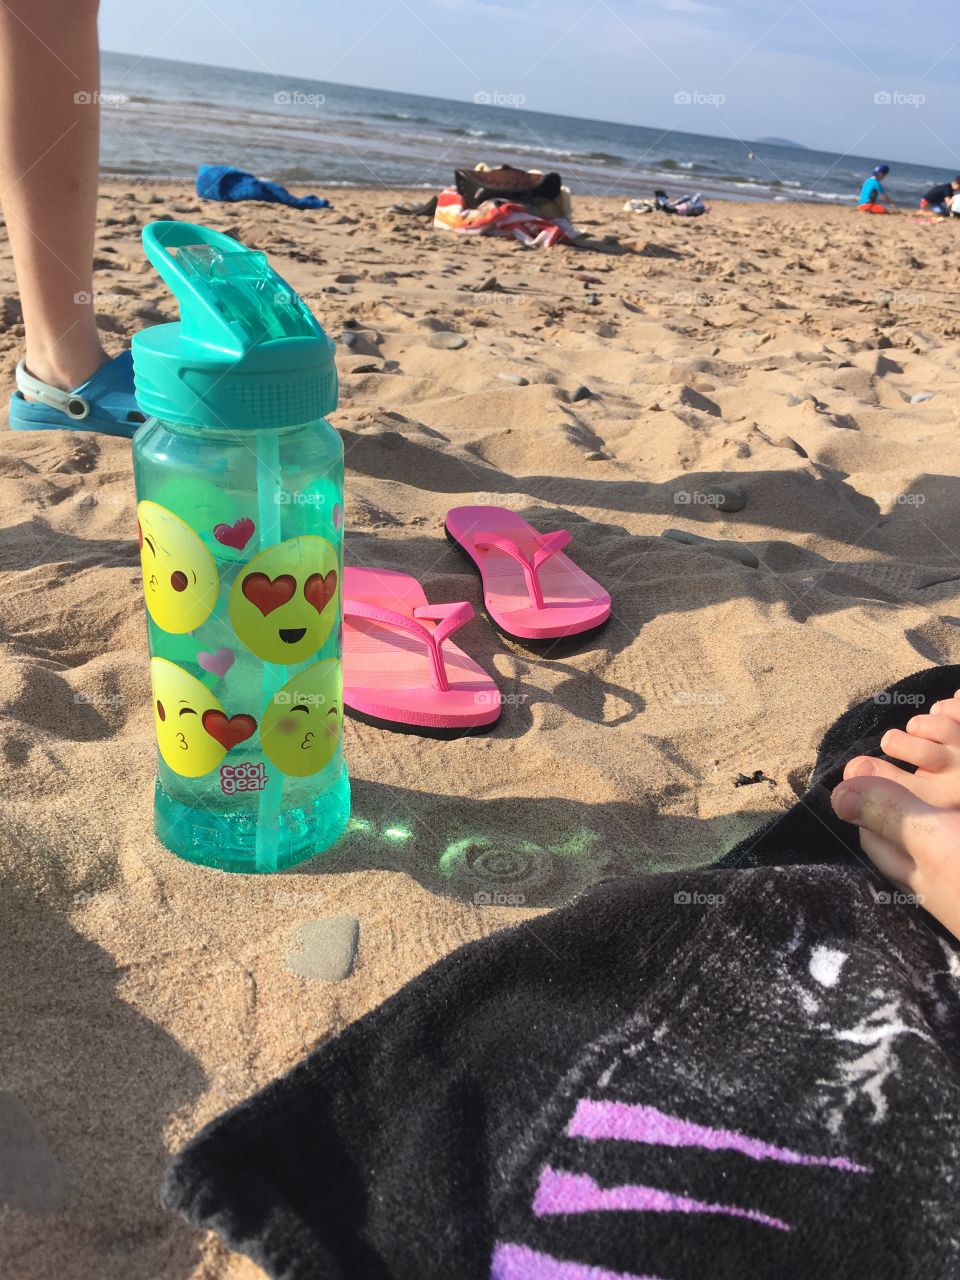 Beach day! Teal emoji water bottle, pink flip flops on sand. Bare feet on black towel. 